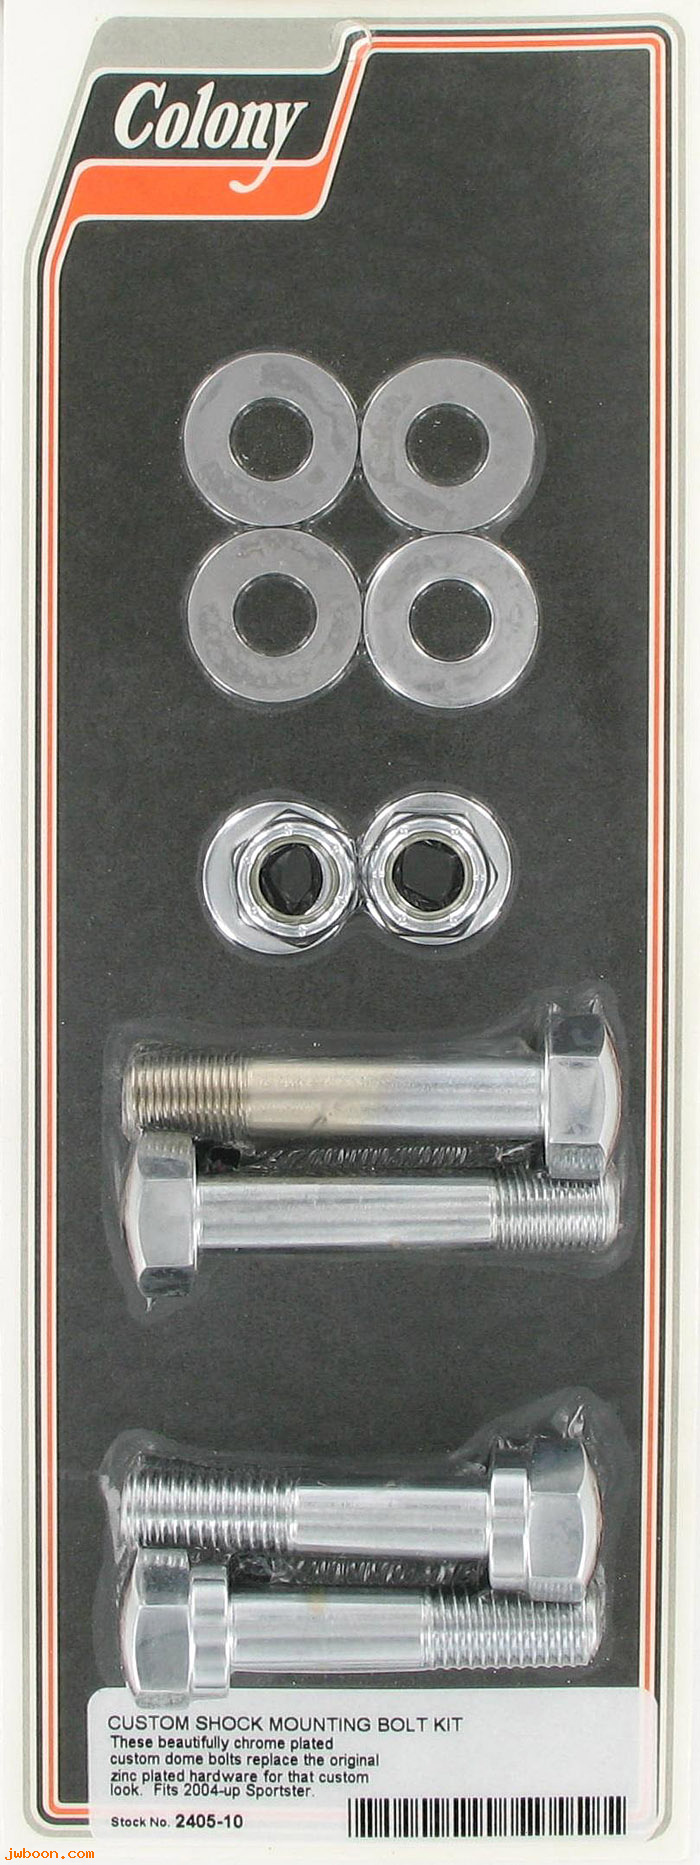 C 2405-10 (): Custom shock mounting bolt kit, in stock - XL '04-